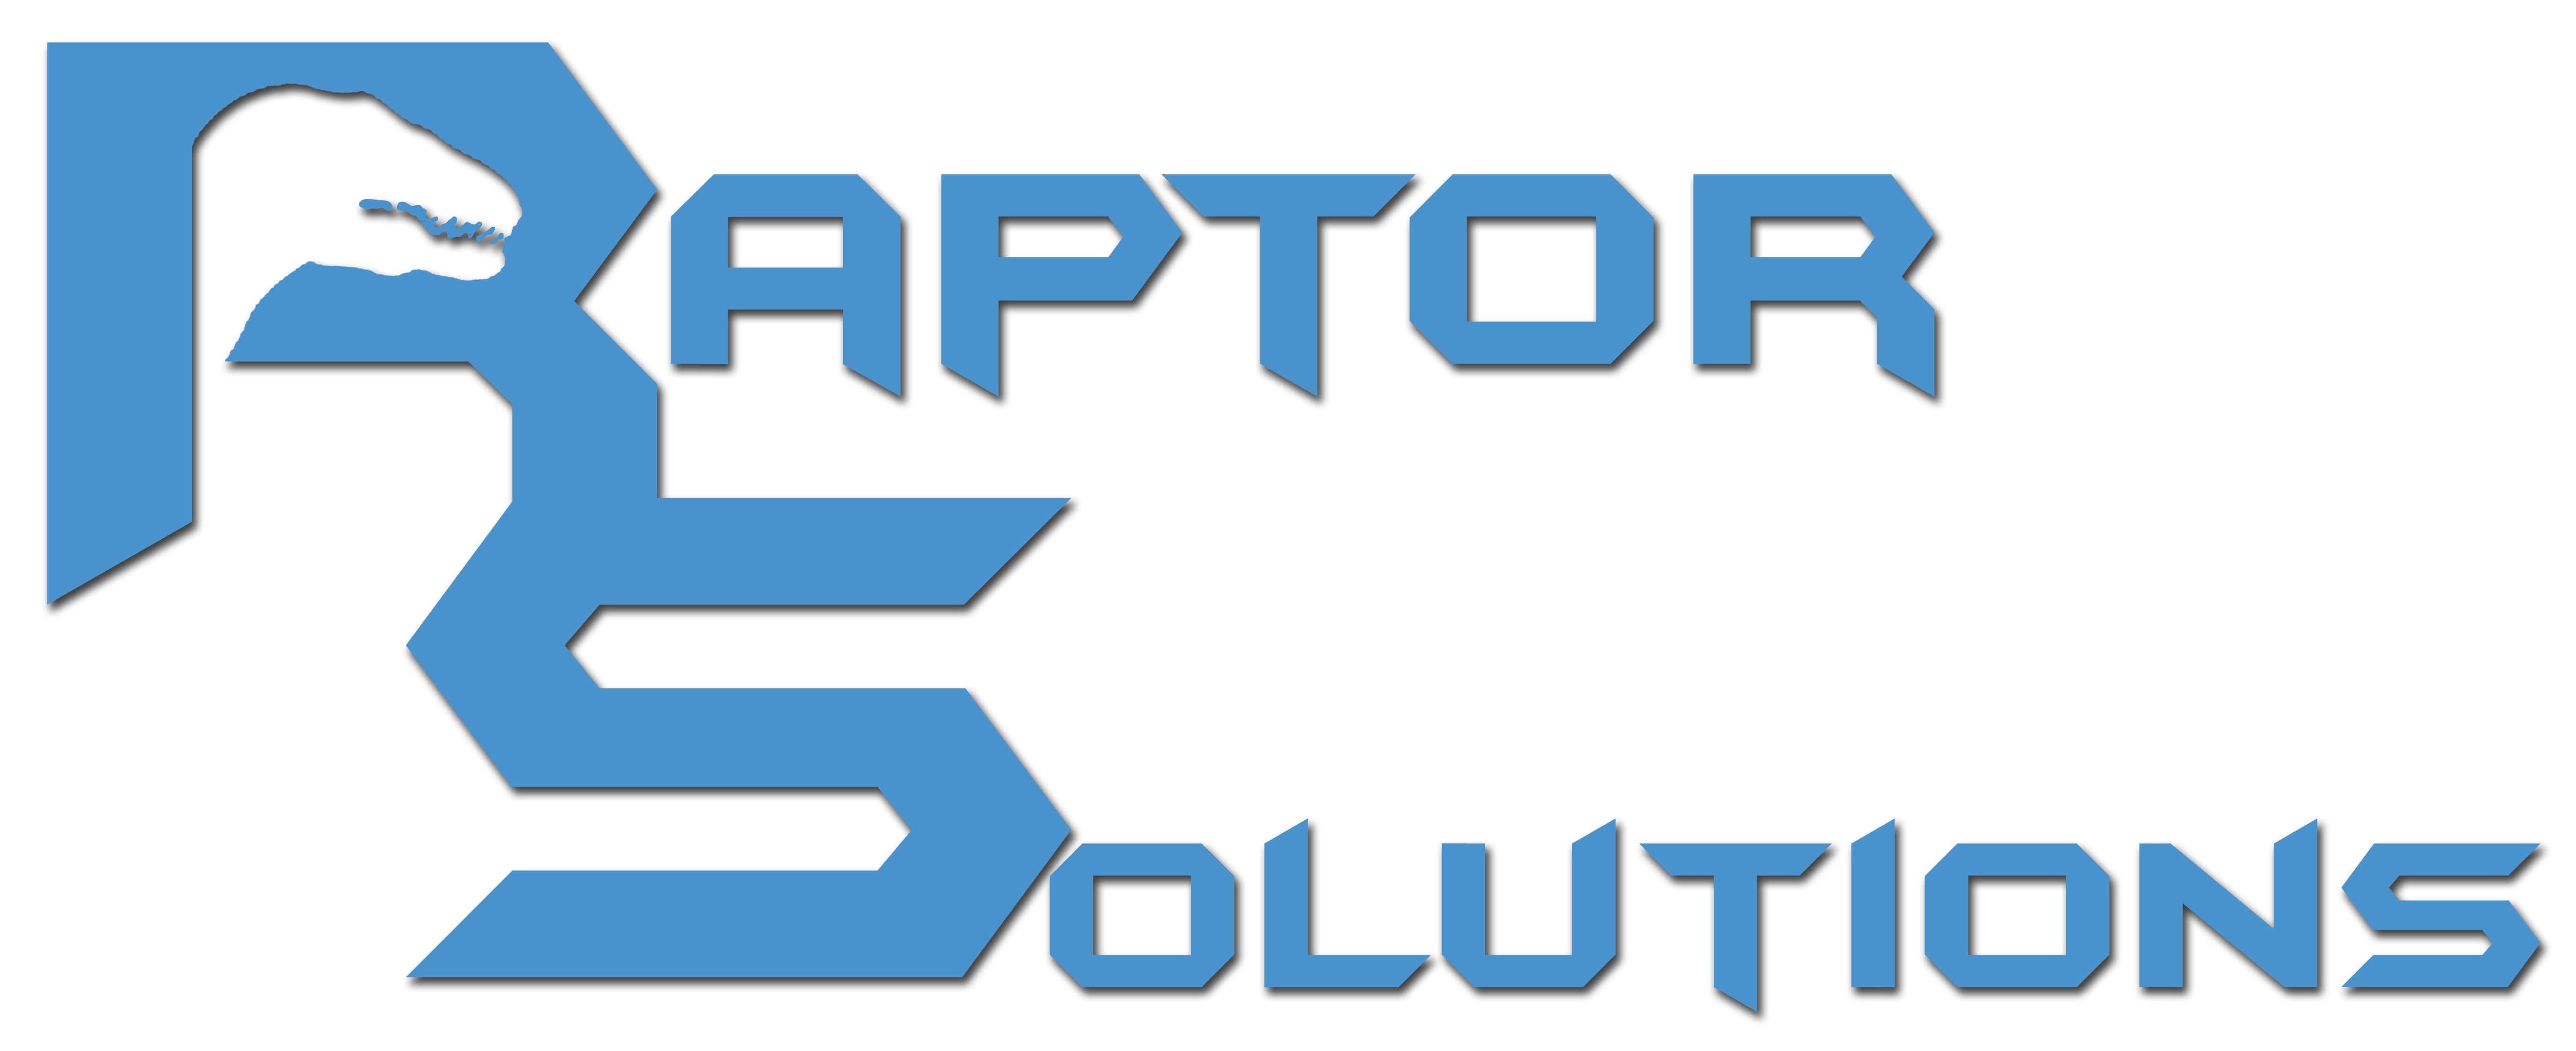 RaptorSolutionsLogo2Transparen2.jpg